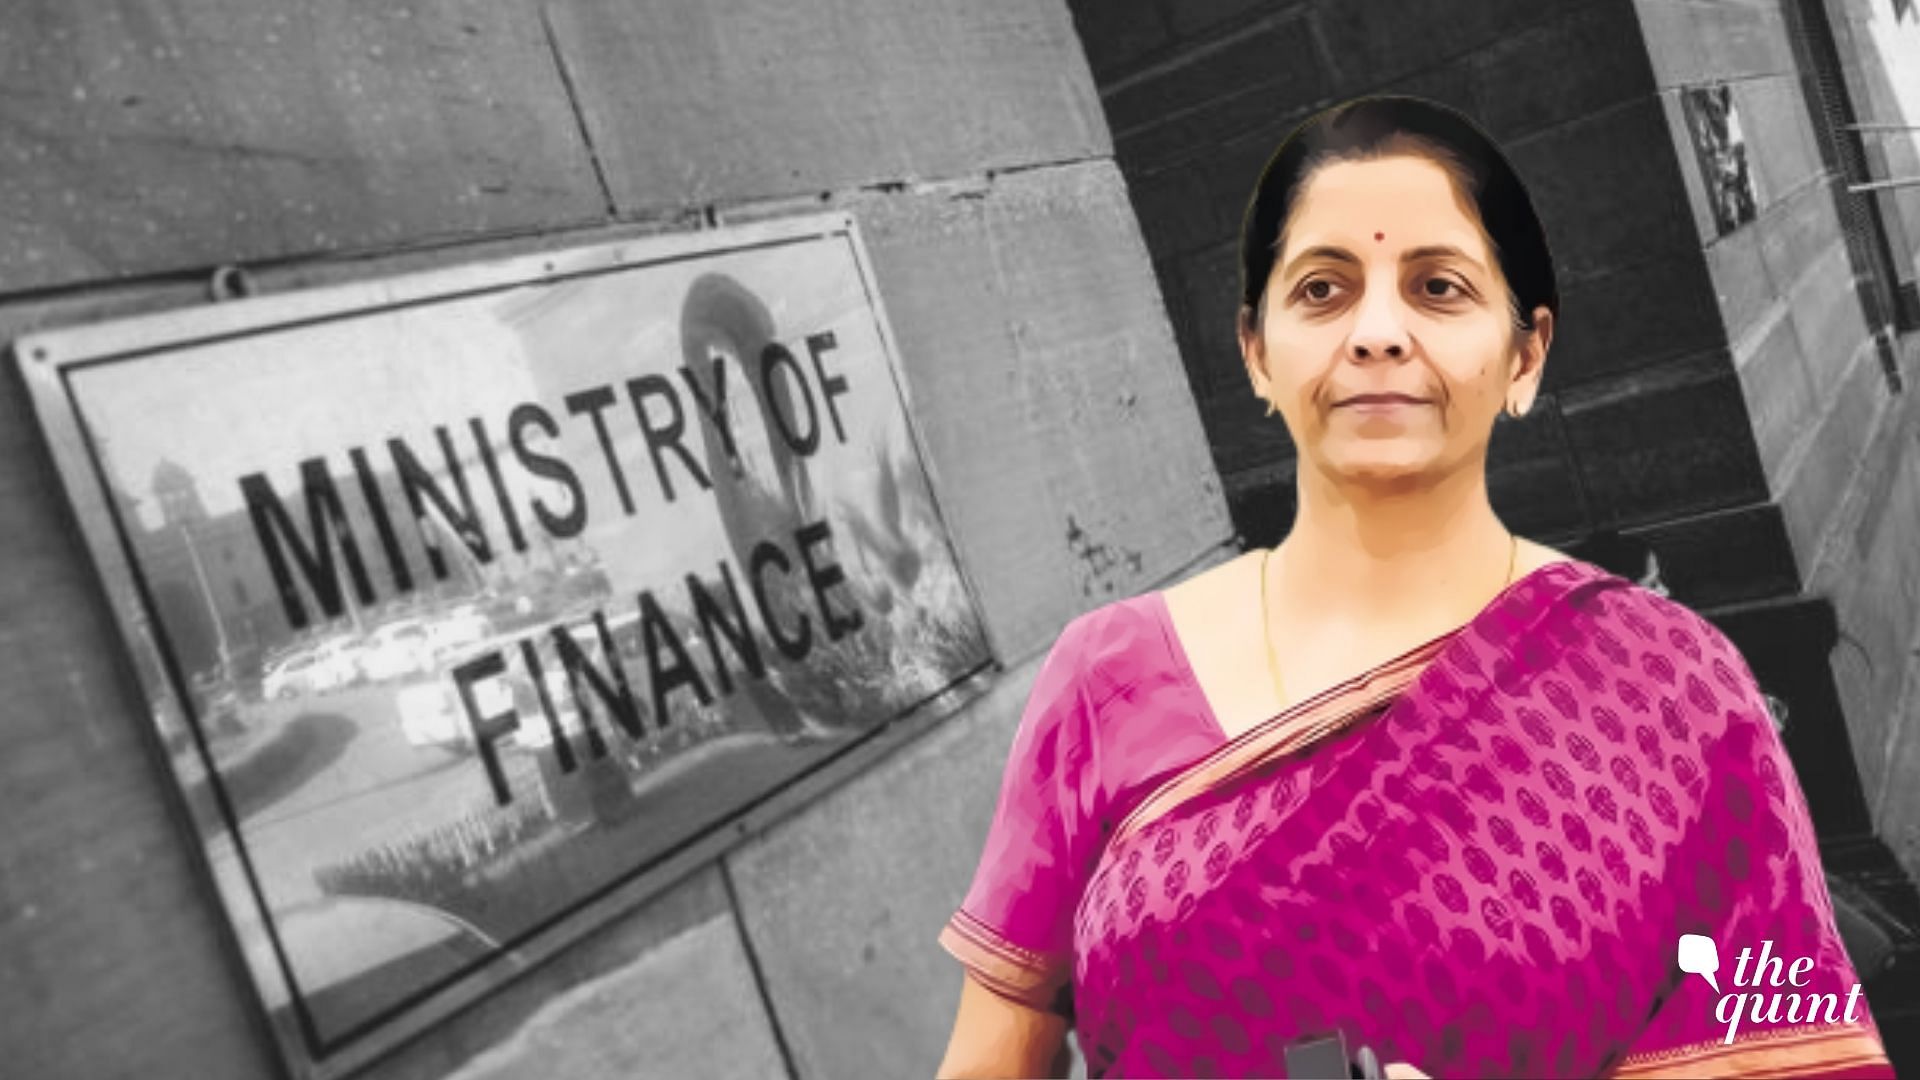 Image of Finance Minister Nirmala Sitharaman used for representational purposes.